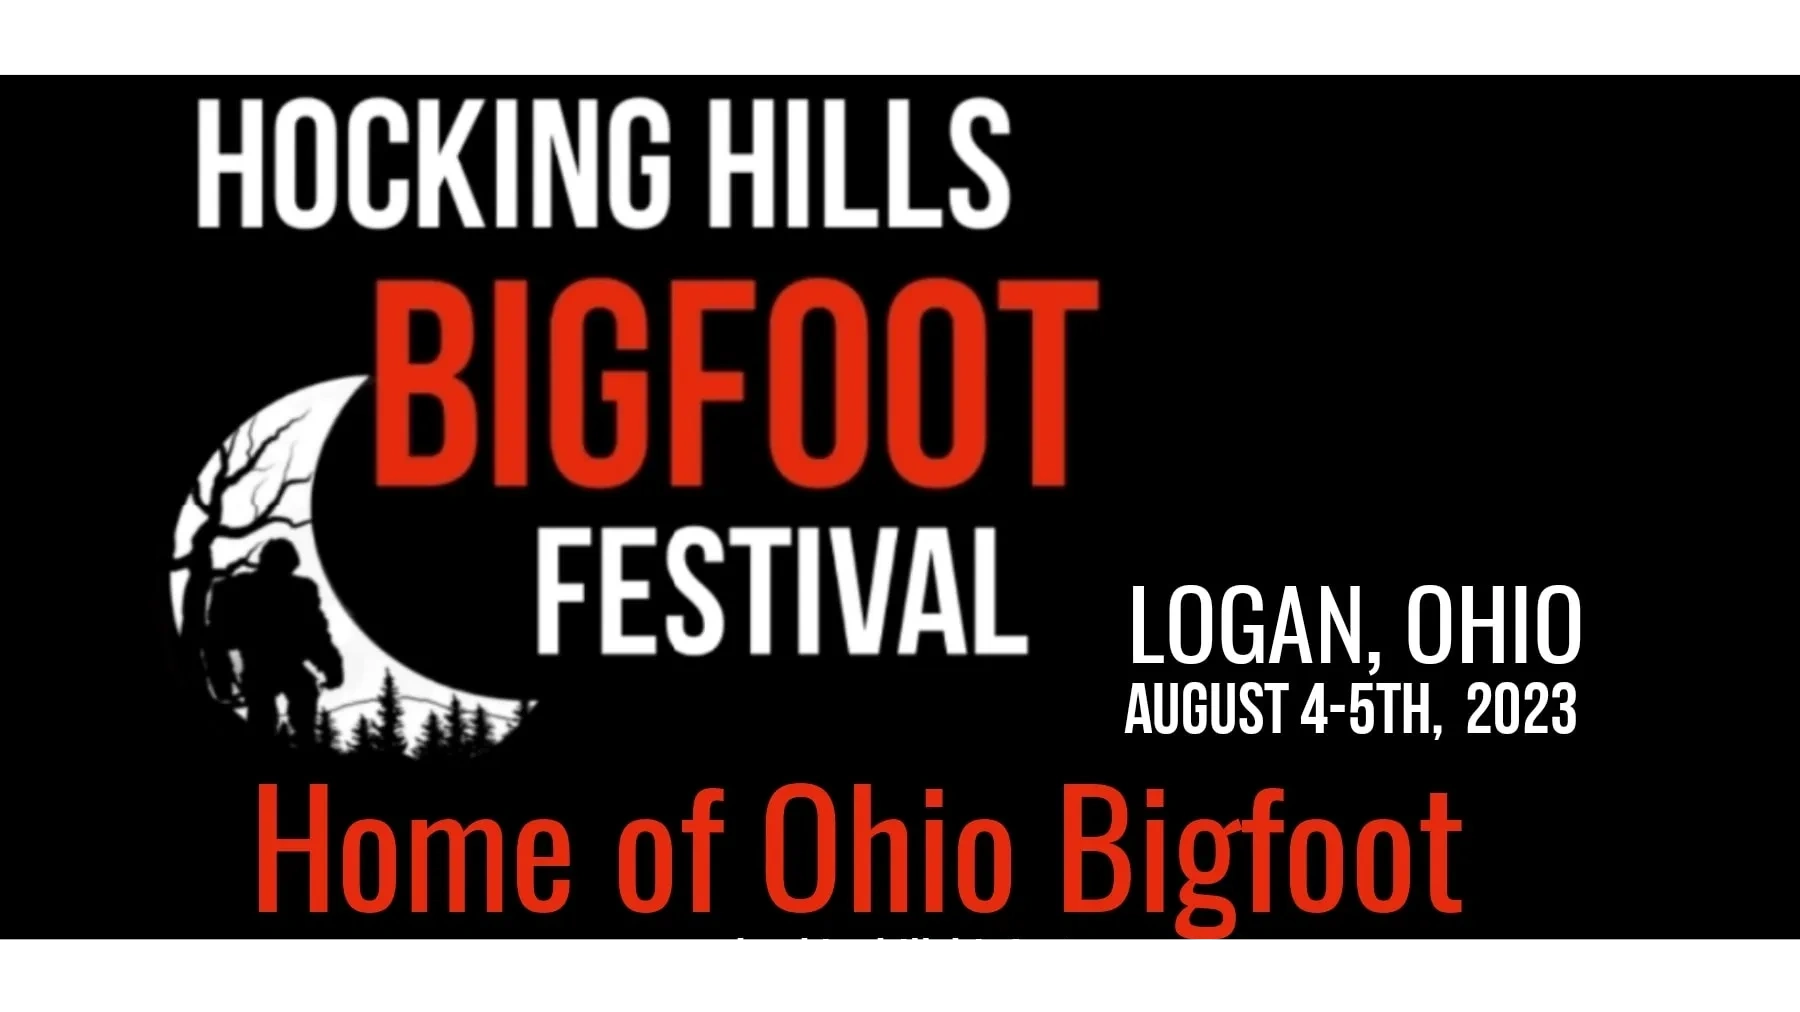 Hocking Hills Bigfoot Festival Home